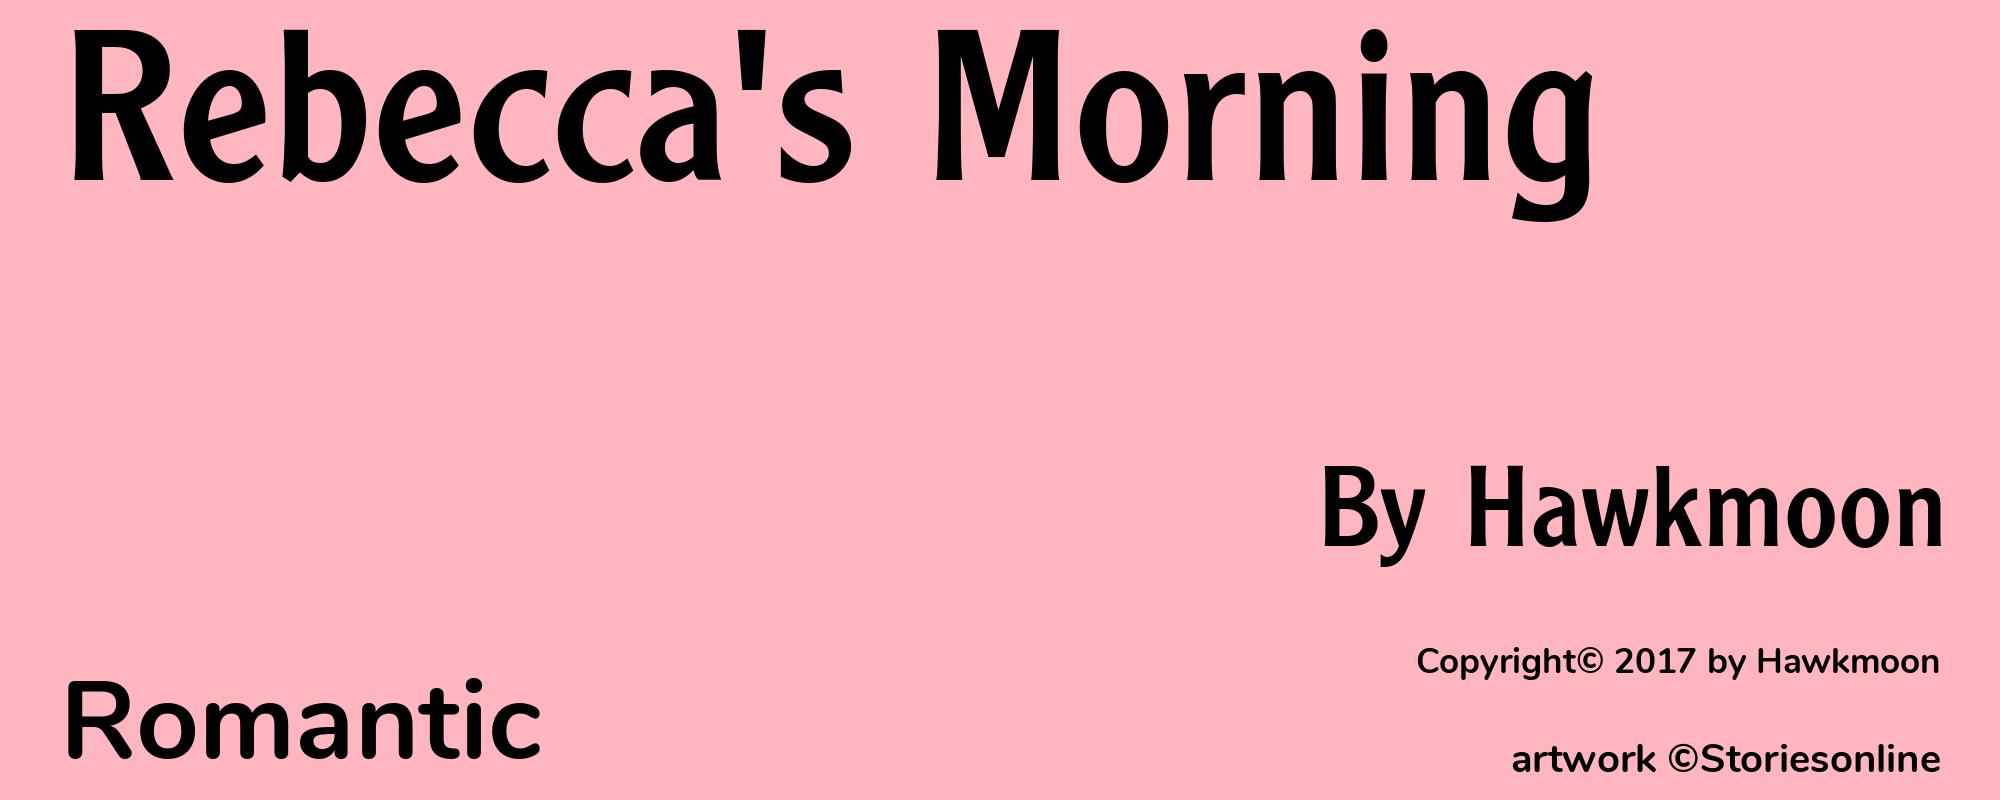 Rebecca's Morning - Cover